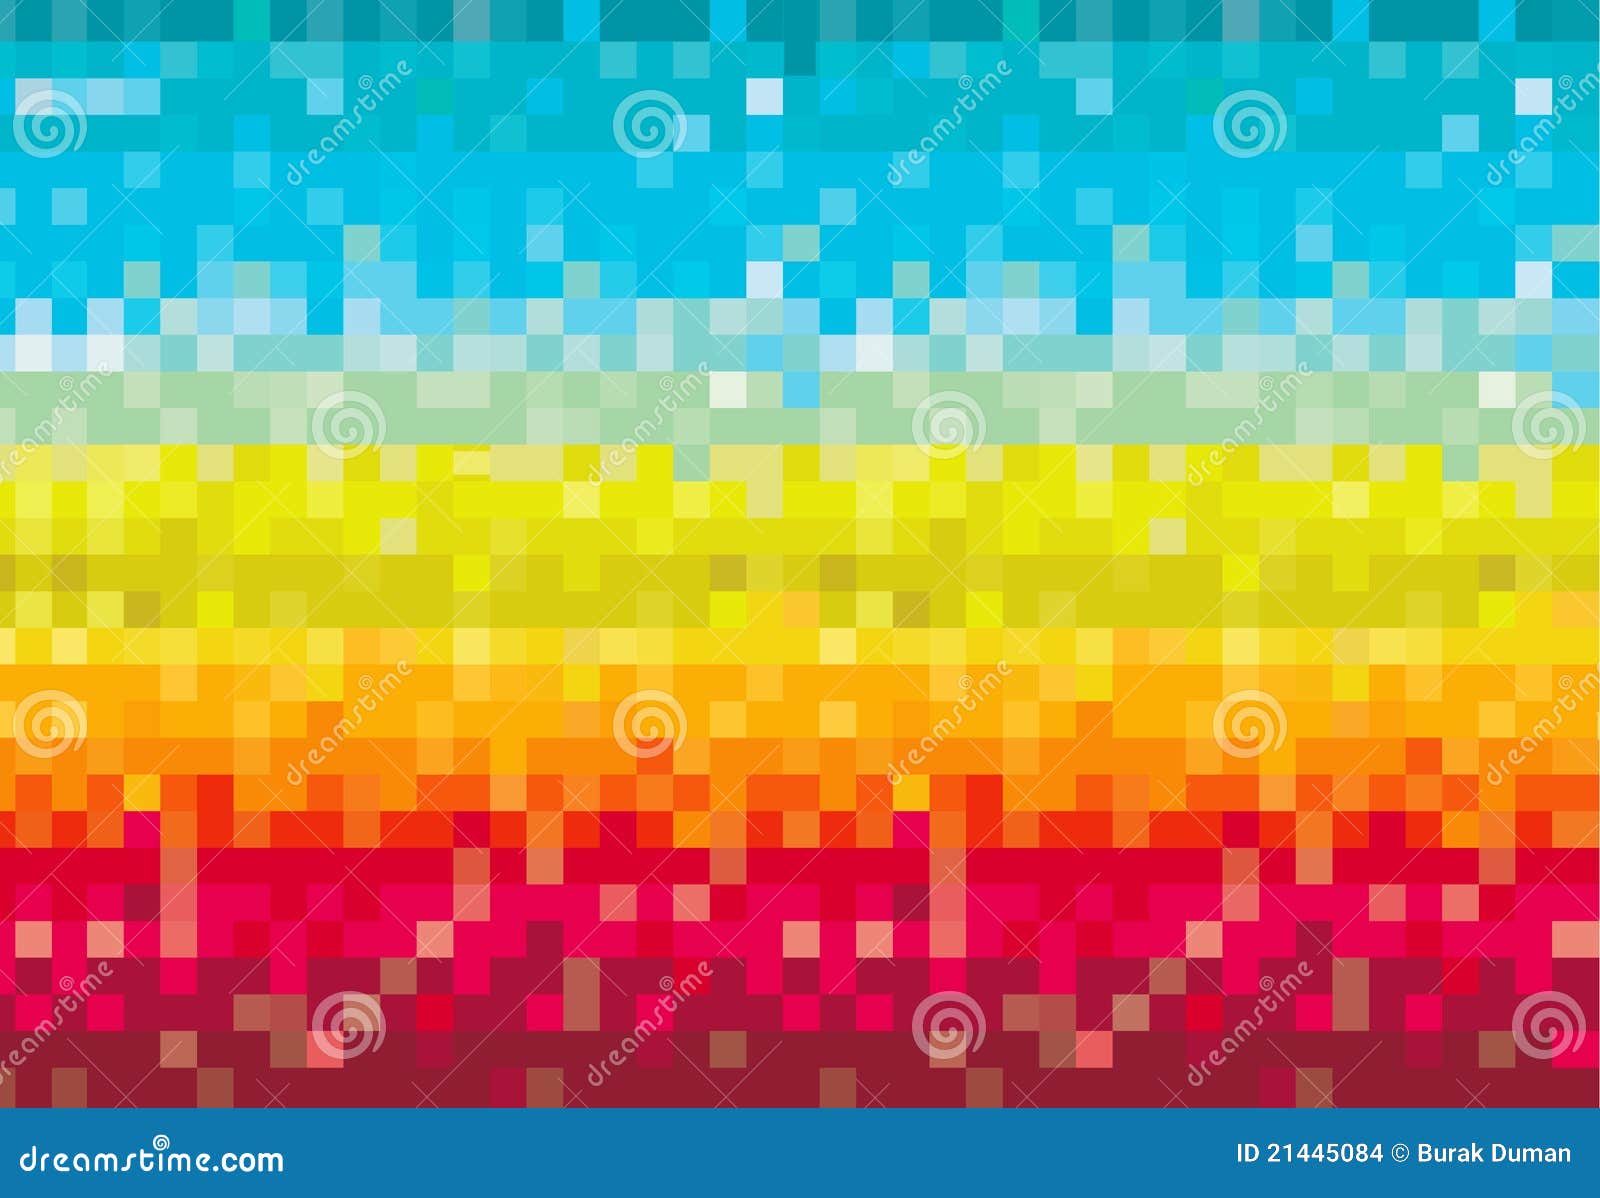 colorful-pixelated-21445084.jpg